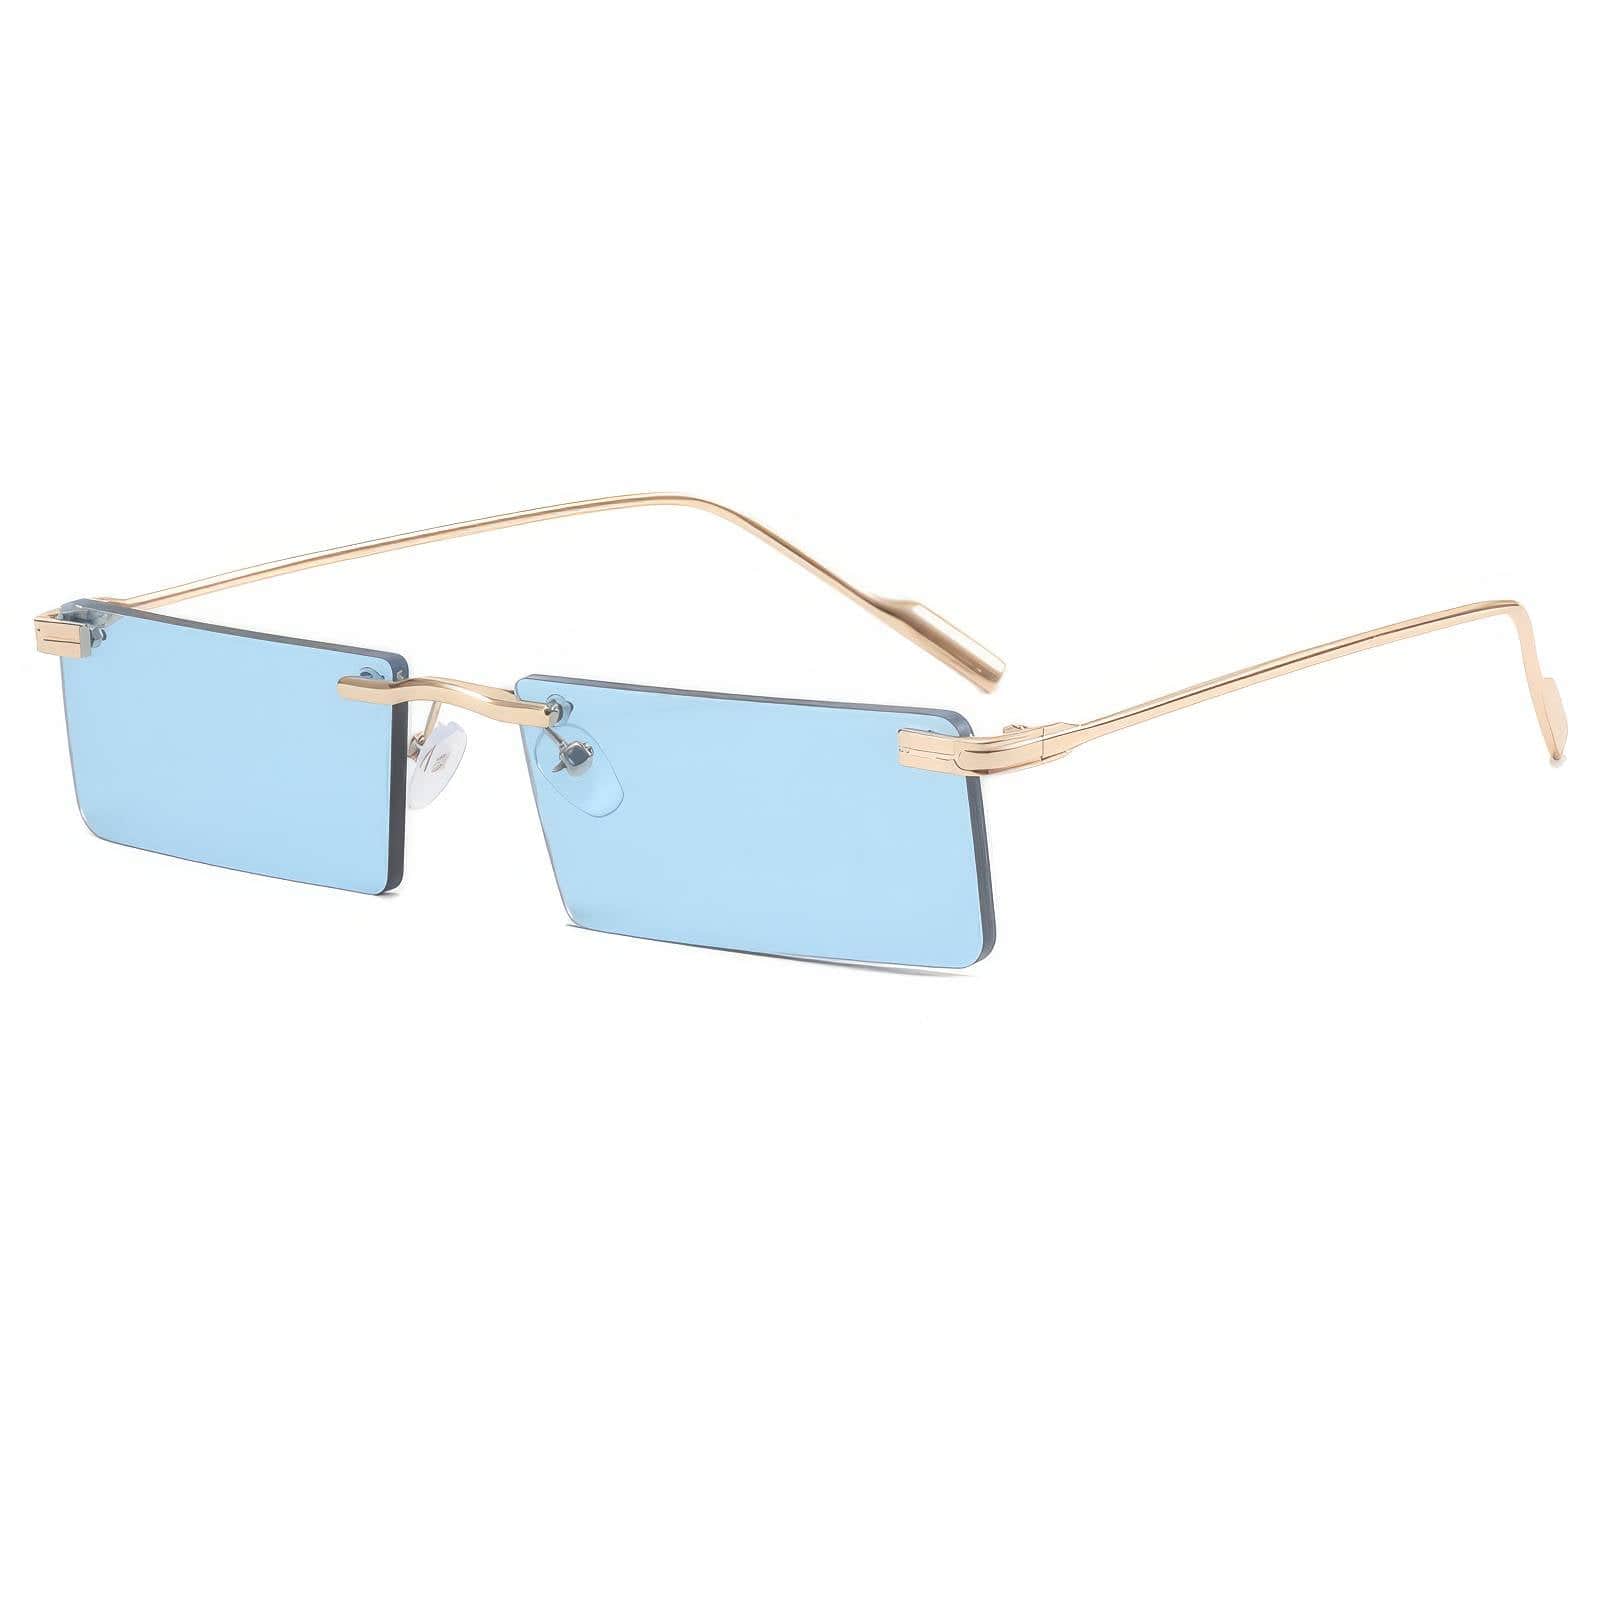 Square Small Eyewear Stylish Frames Light Blue/Gold / Resin